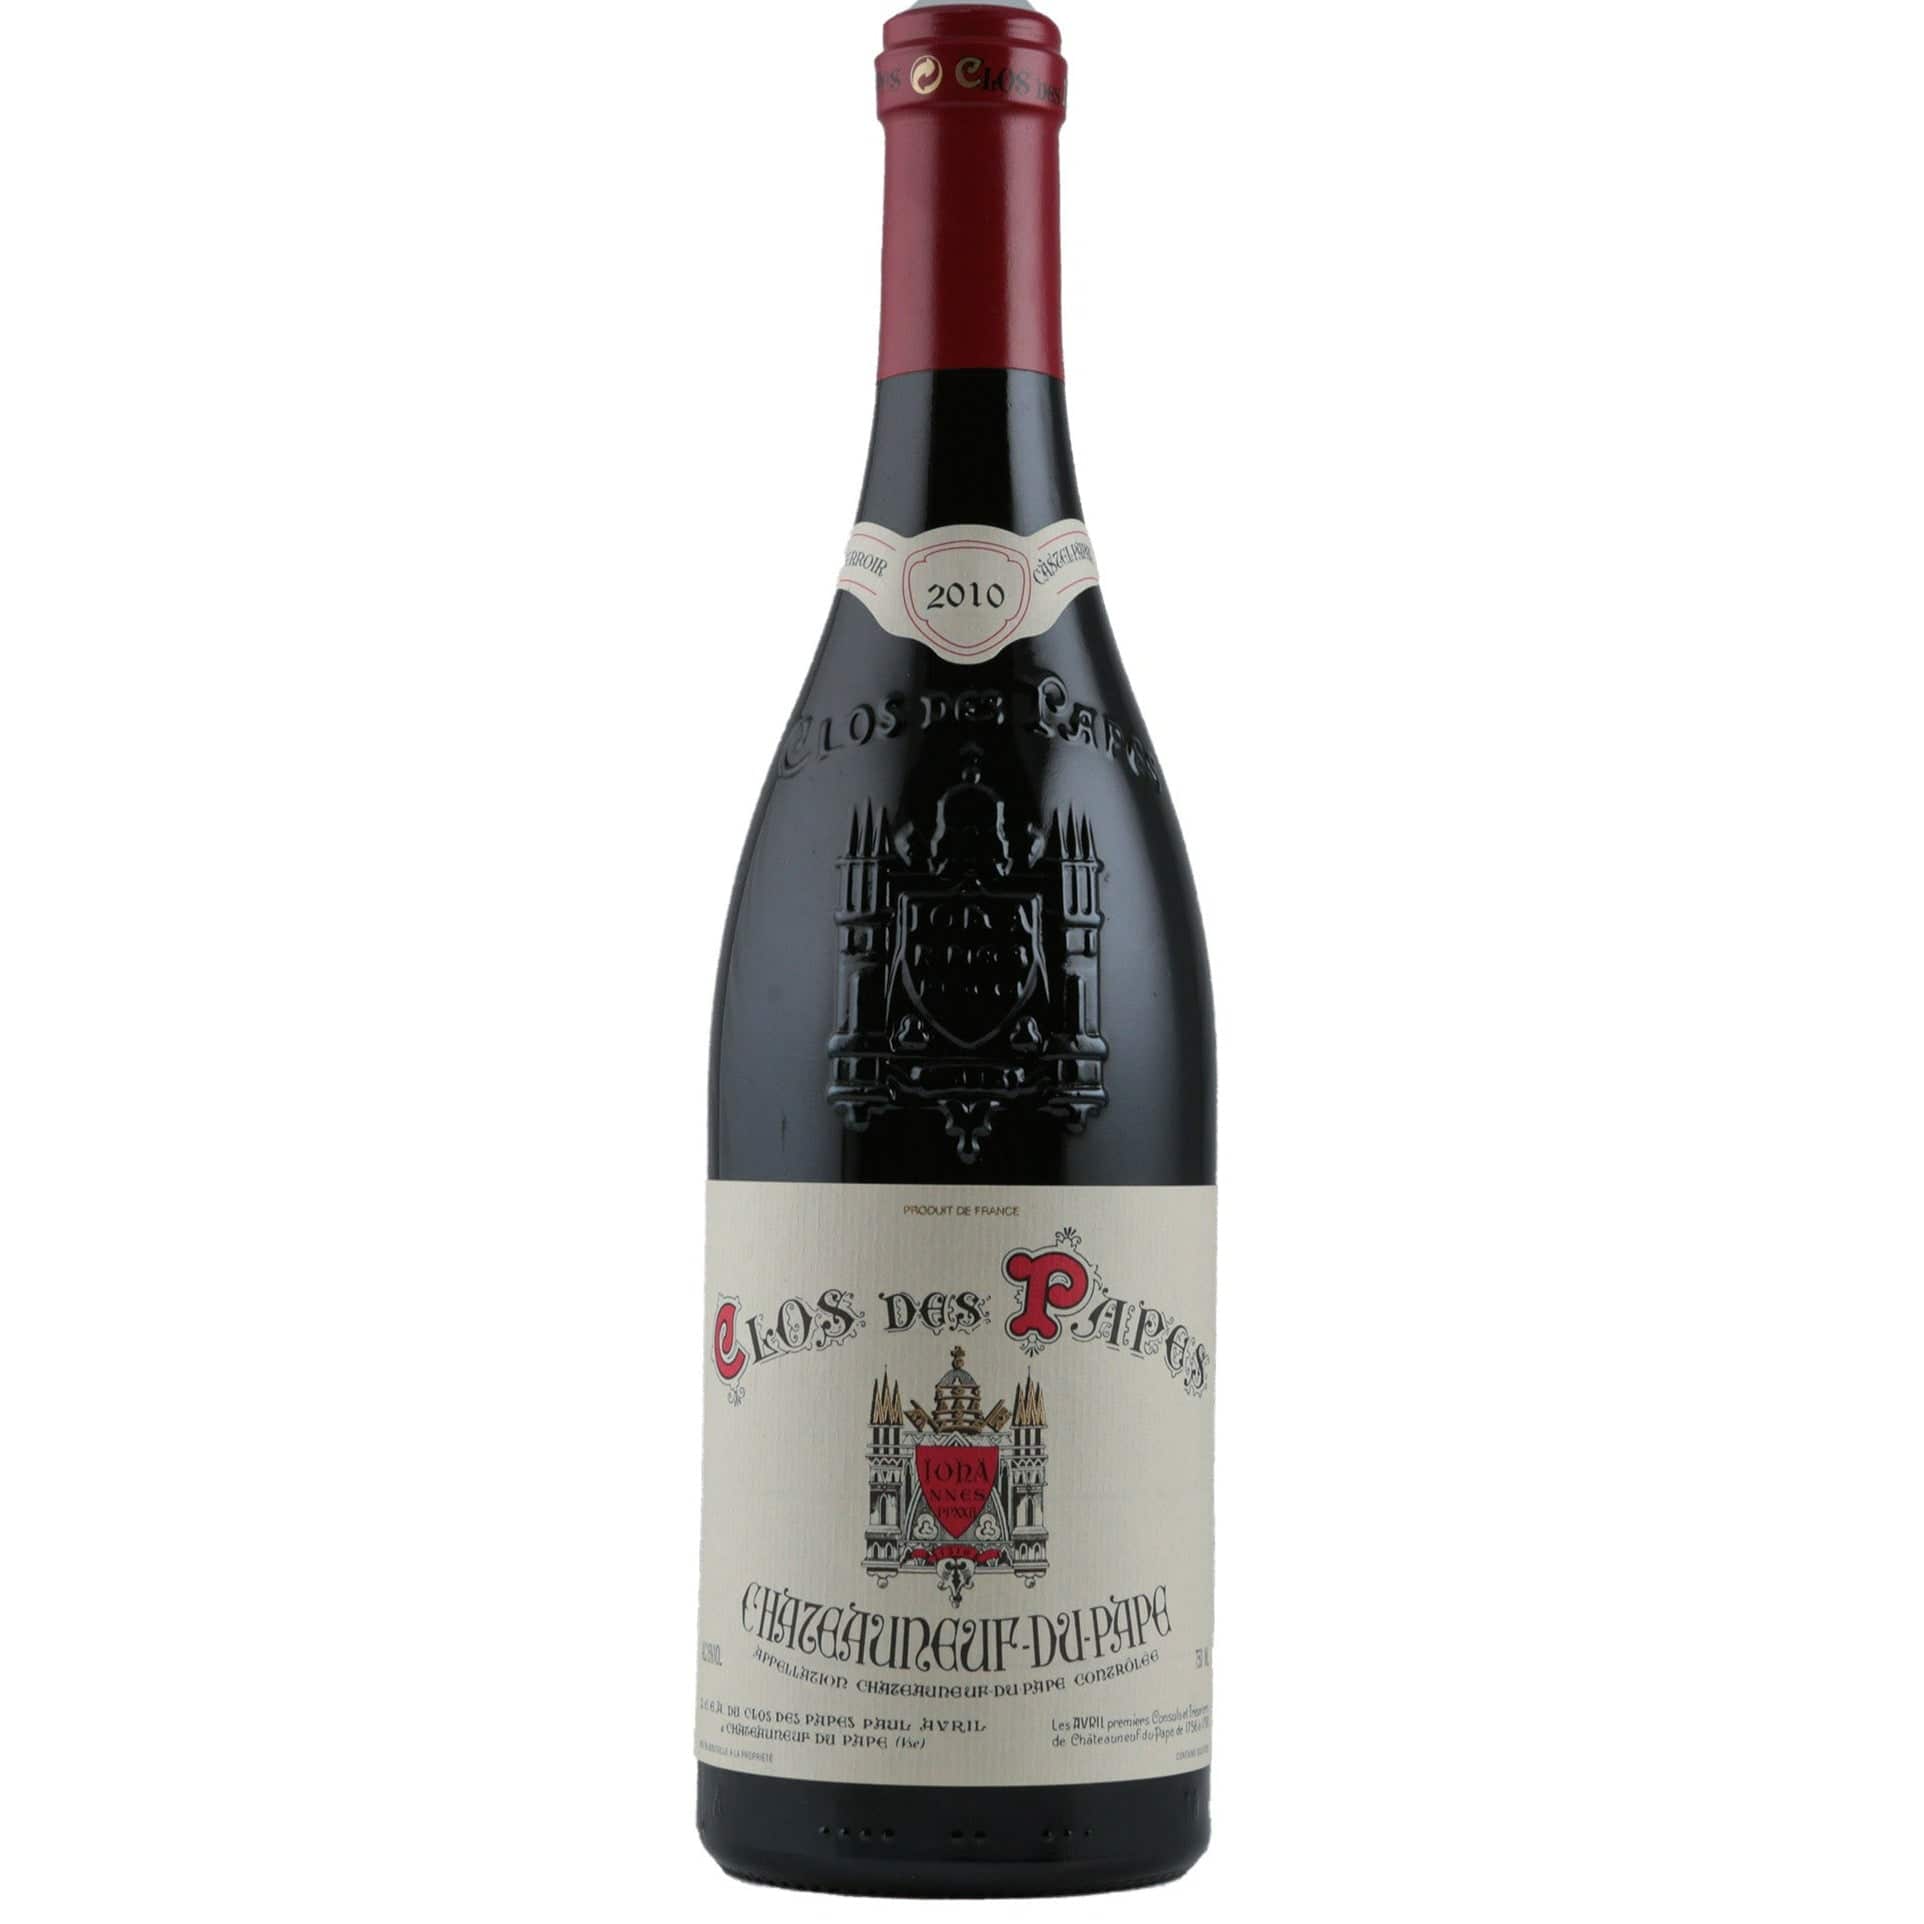 Single bottle of Red wine Paul Avril Clos des Papes, CDP, Chateauneuf du Pape, 2010 65% Grenache, 20% Mourvèdre, 10% Syrah & 5% Vaccarèse